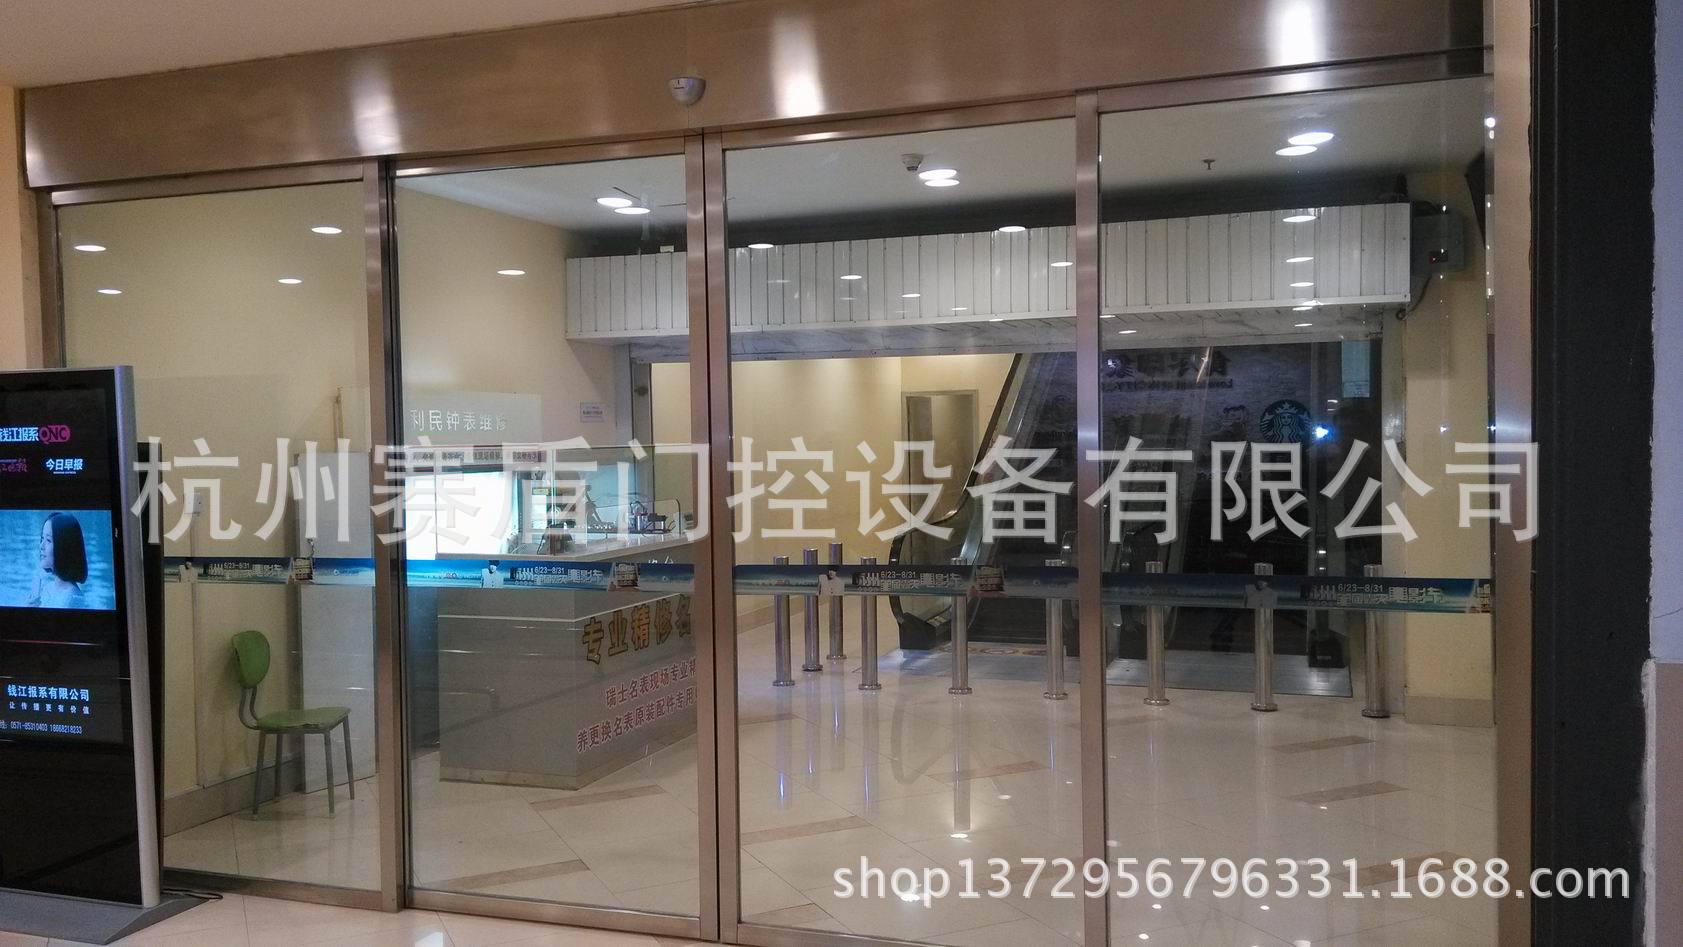 Project-yinxiang mall 2